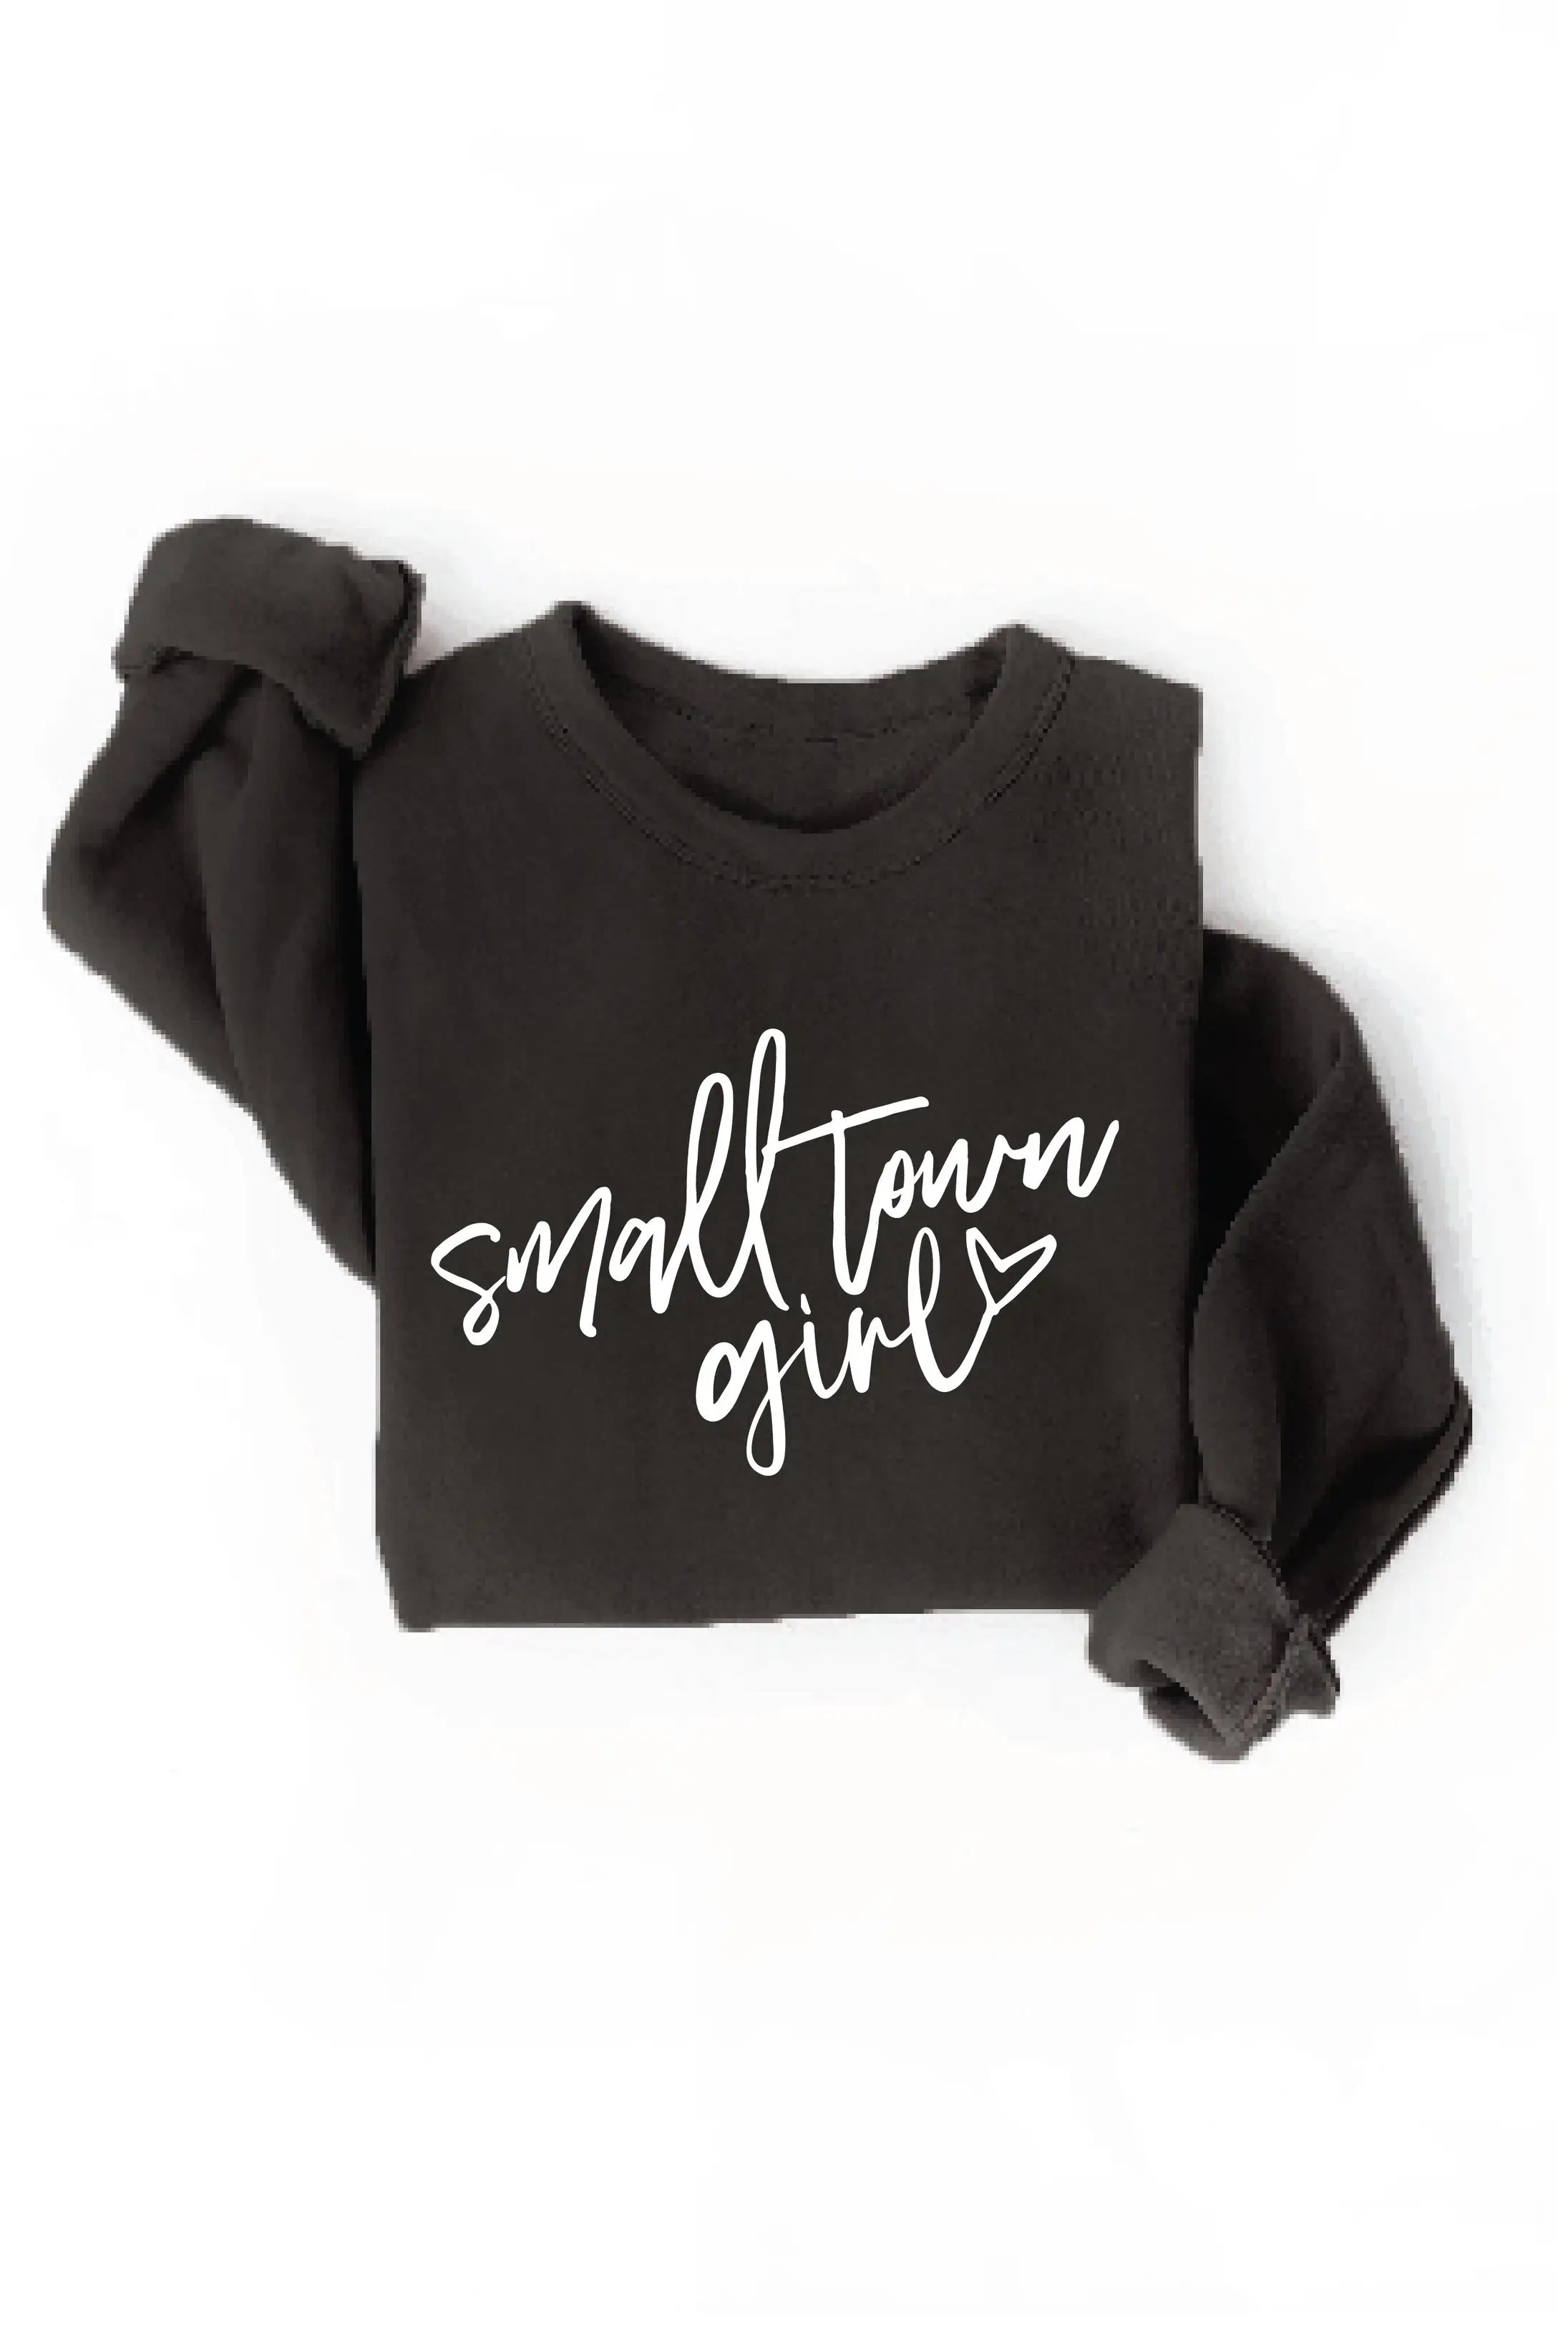 Small Town Girl Sweatshirt